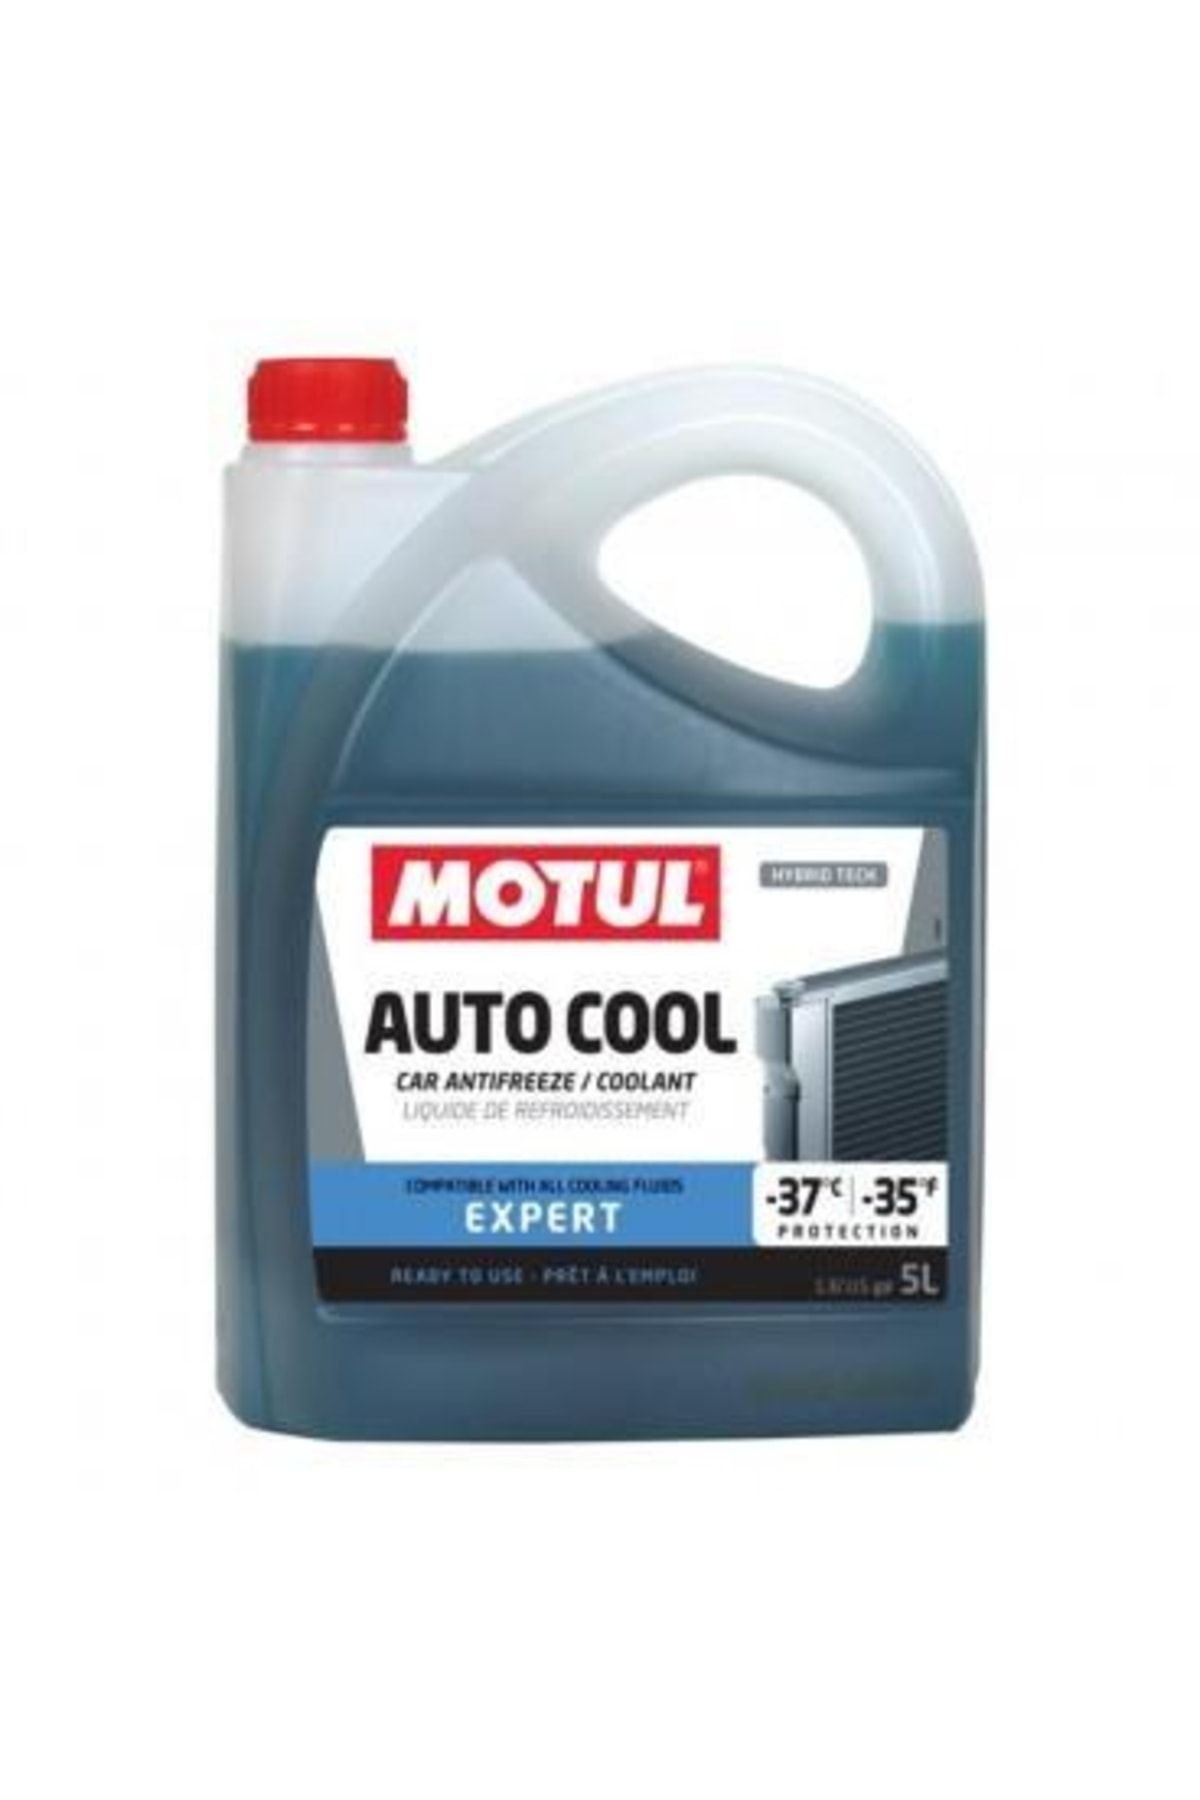 Motul Auto Cool Expert-37 5 Lt